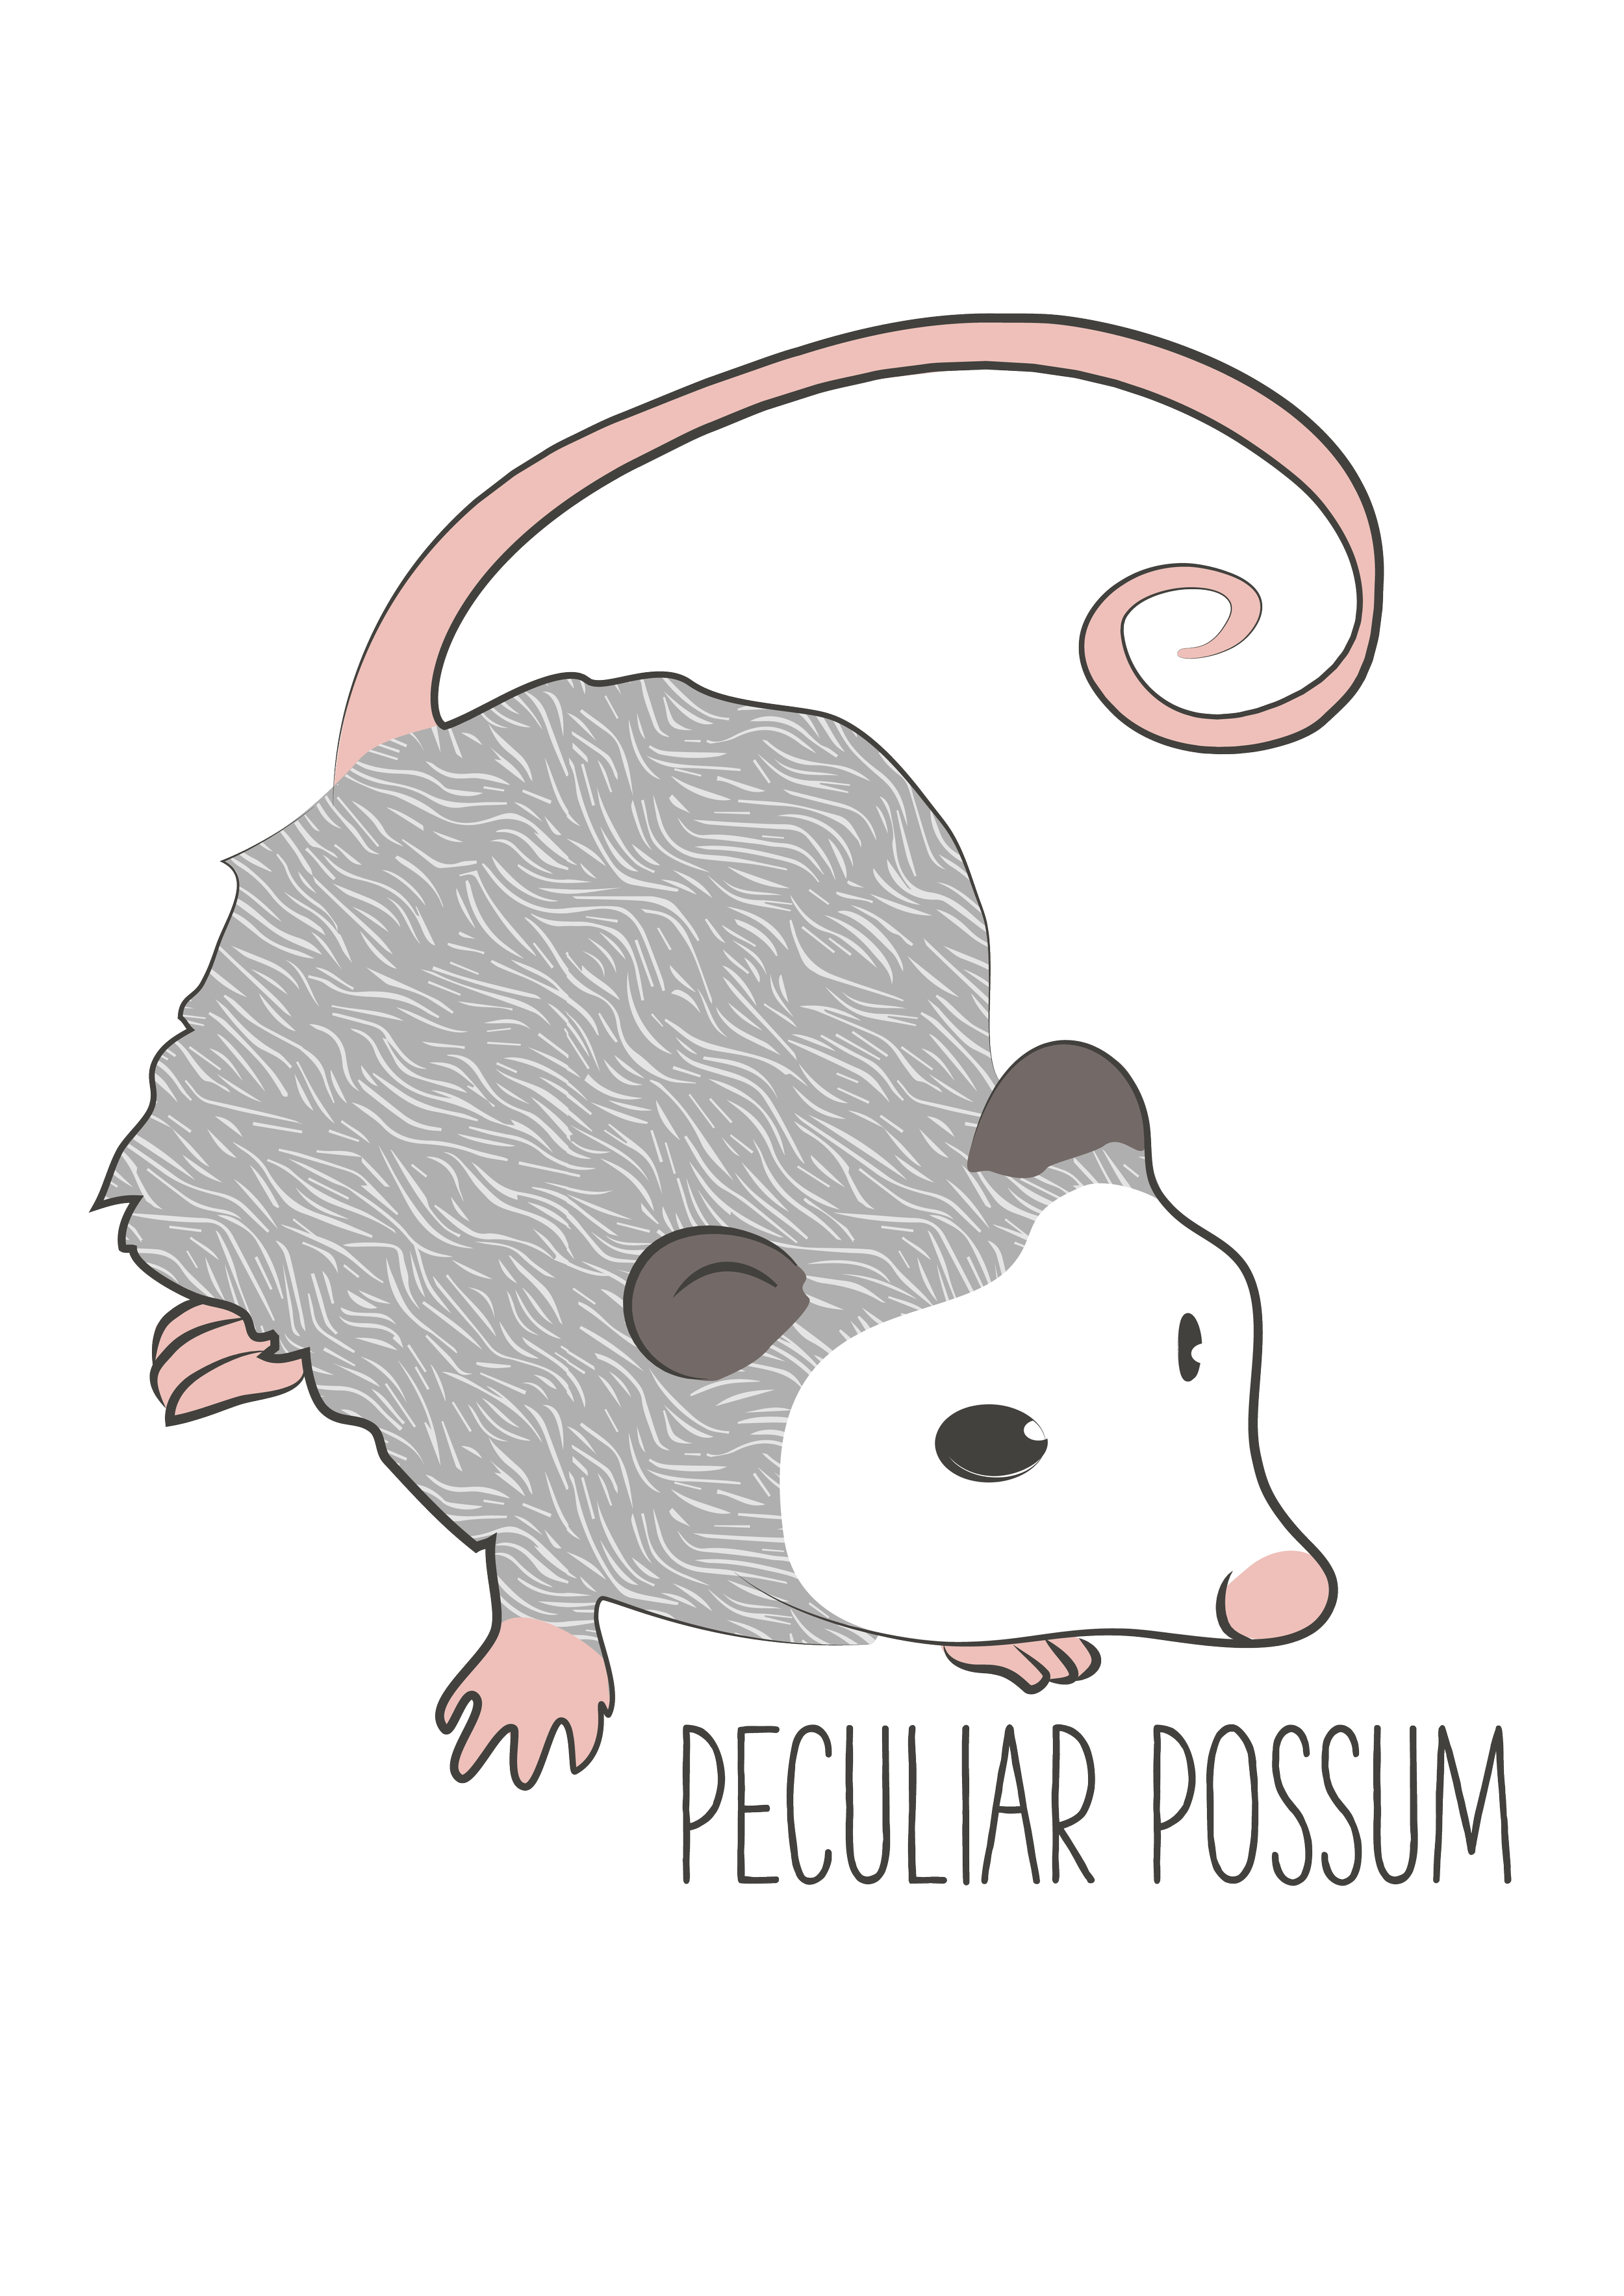 Peculiar Possum_b_t.png